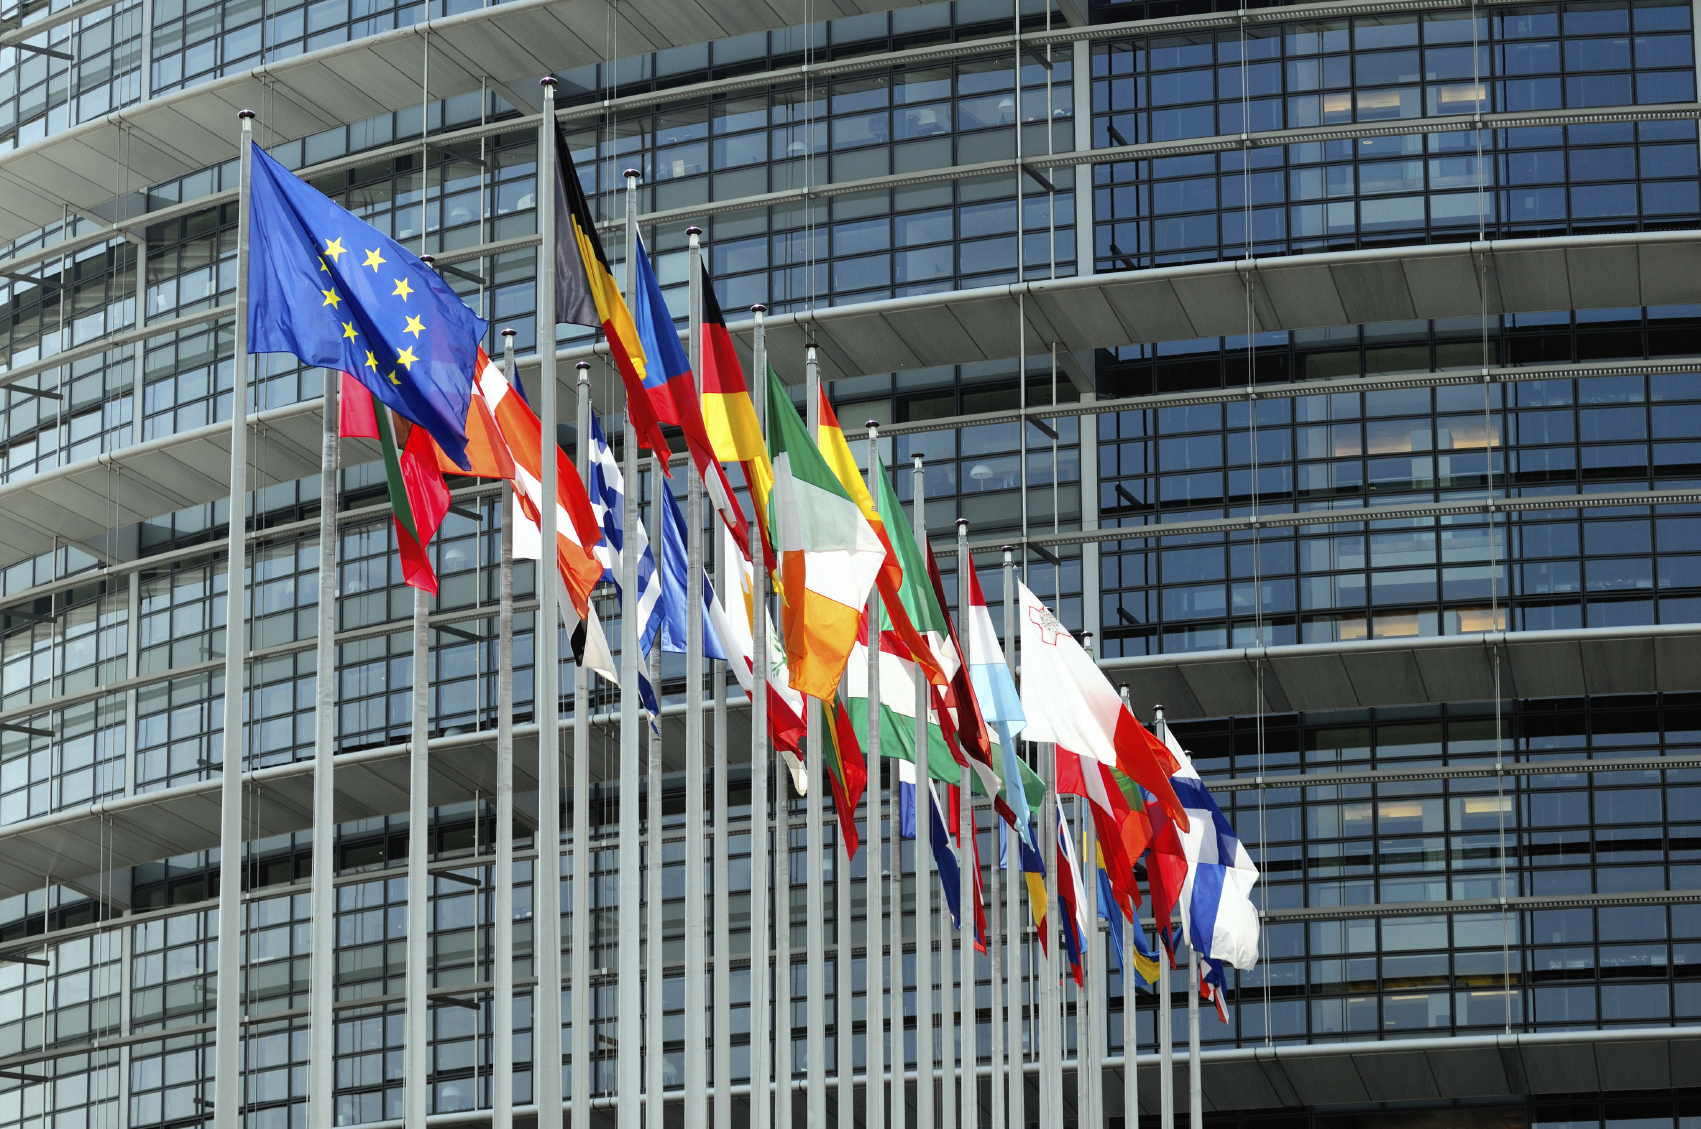 EuroParliament flags in Strasbourg